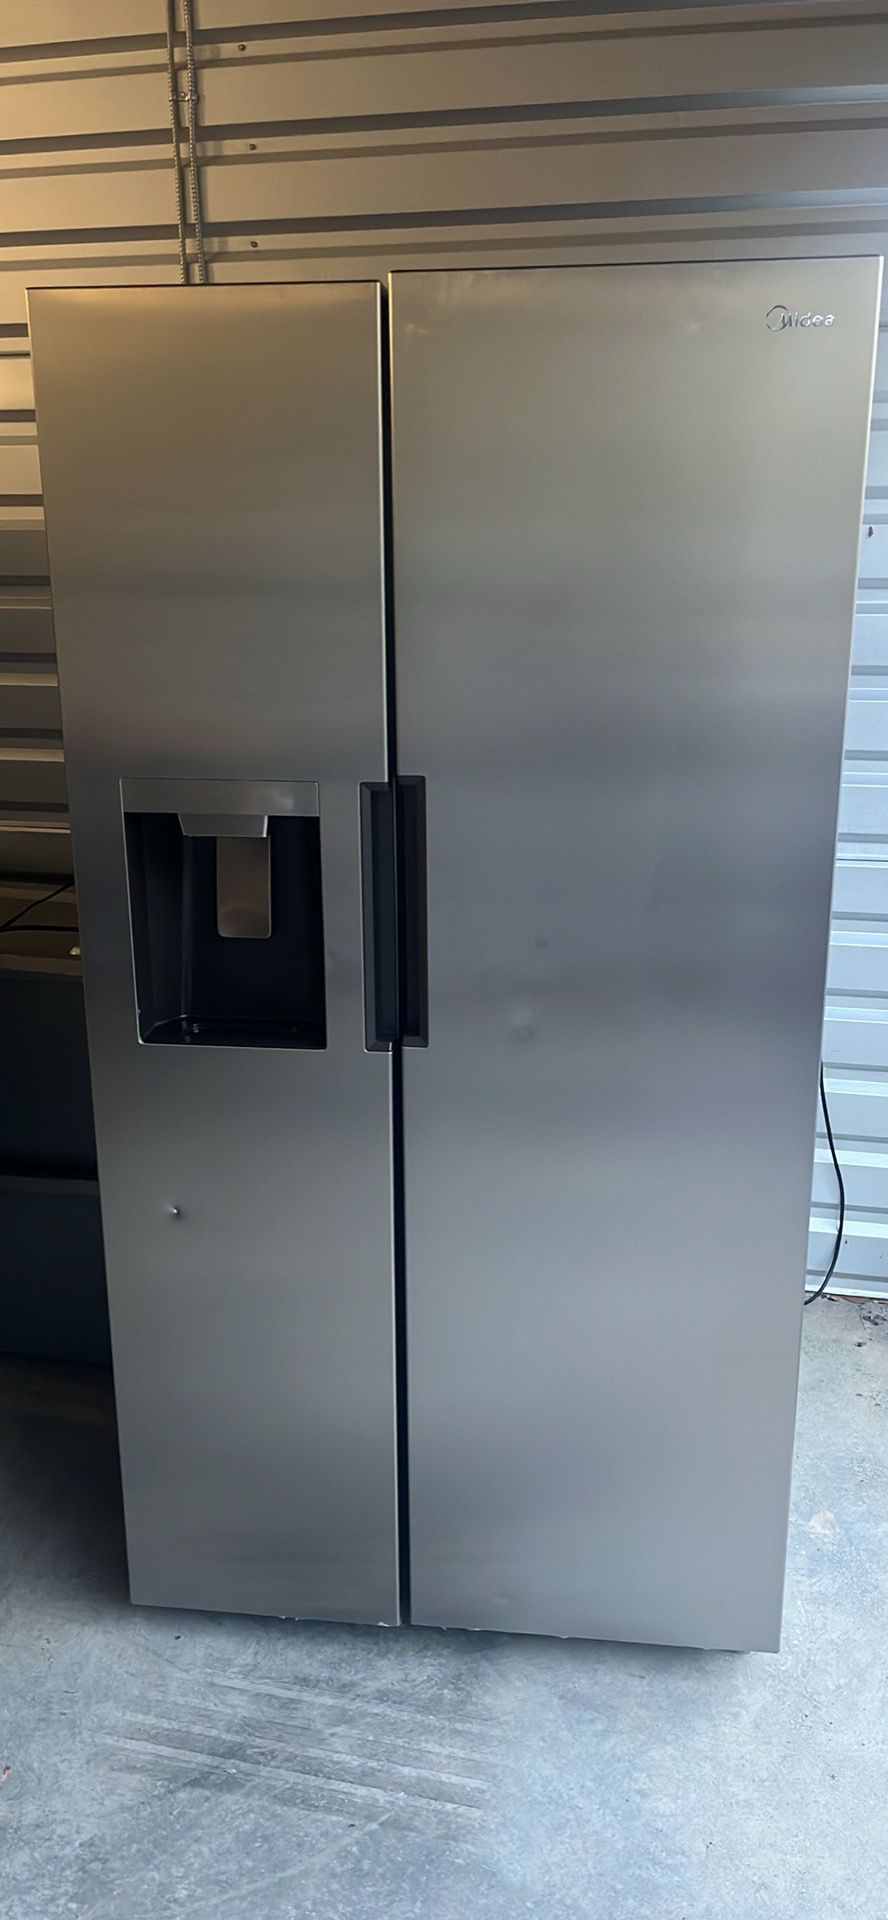 🌟 Ultimate Deals! Budget-Friendly Midea 26.3-cu ft Side-by-Side Refrigerator 🌟